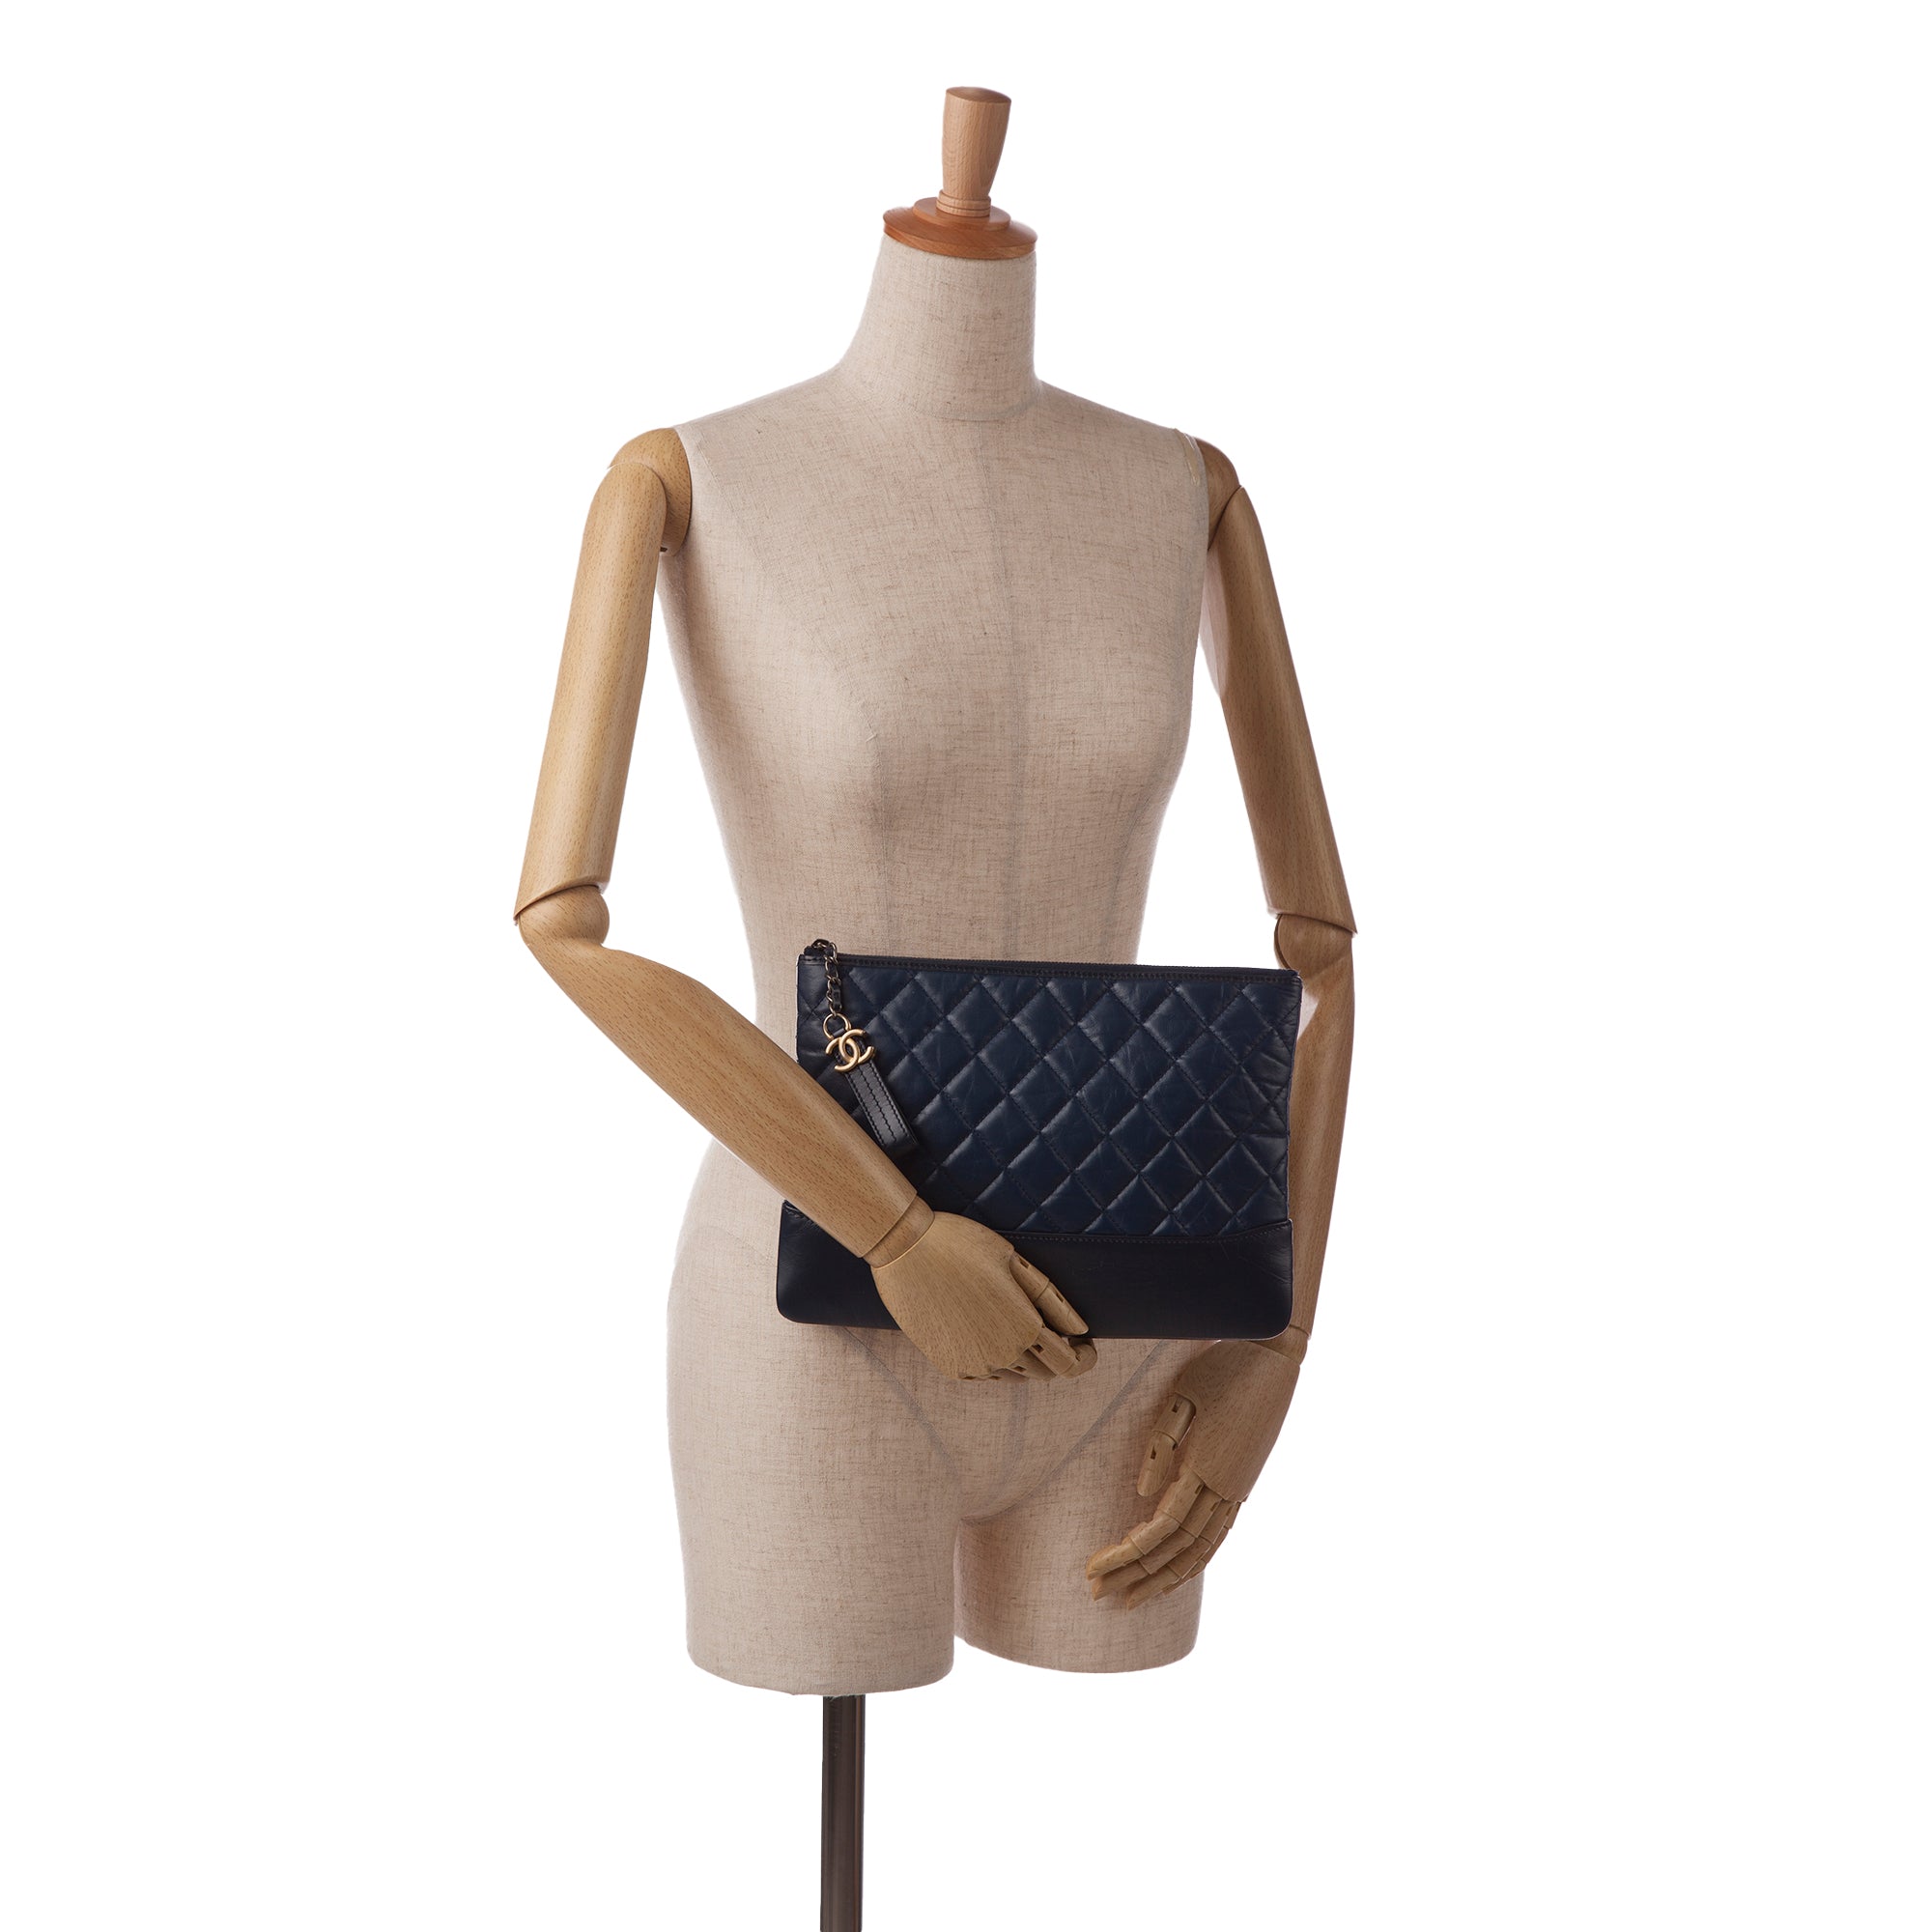 Chanel Blue Gabrielle Clutch Bag